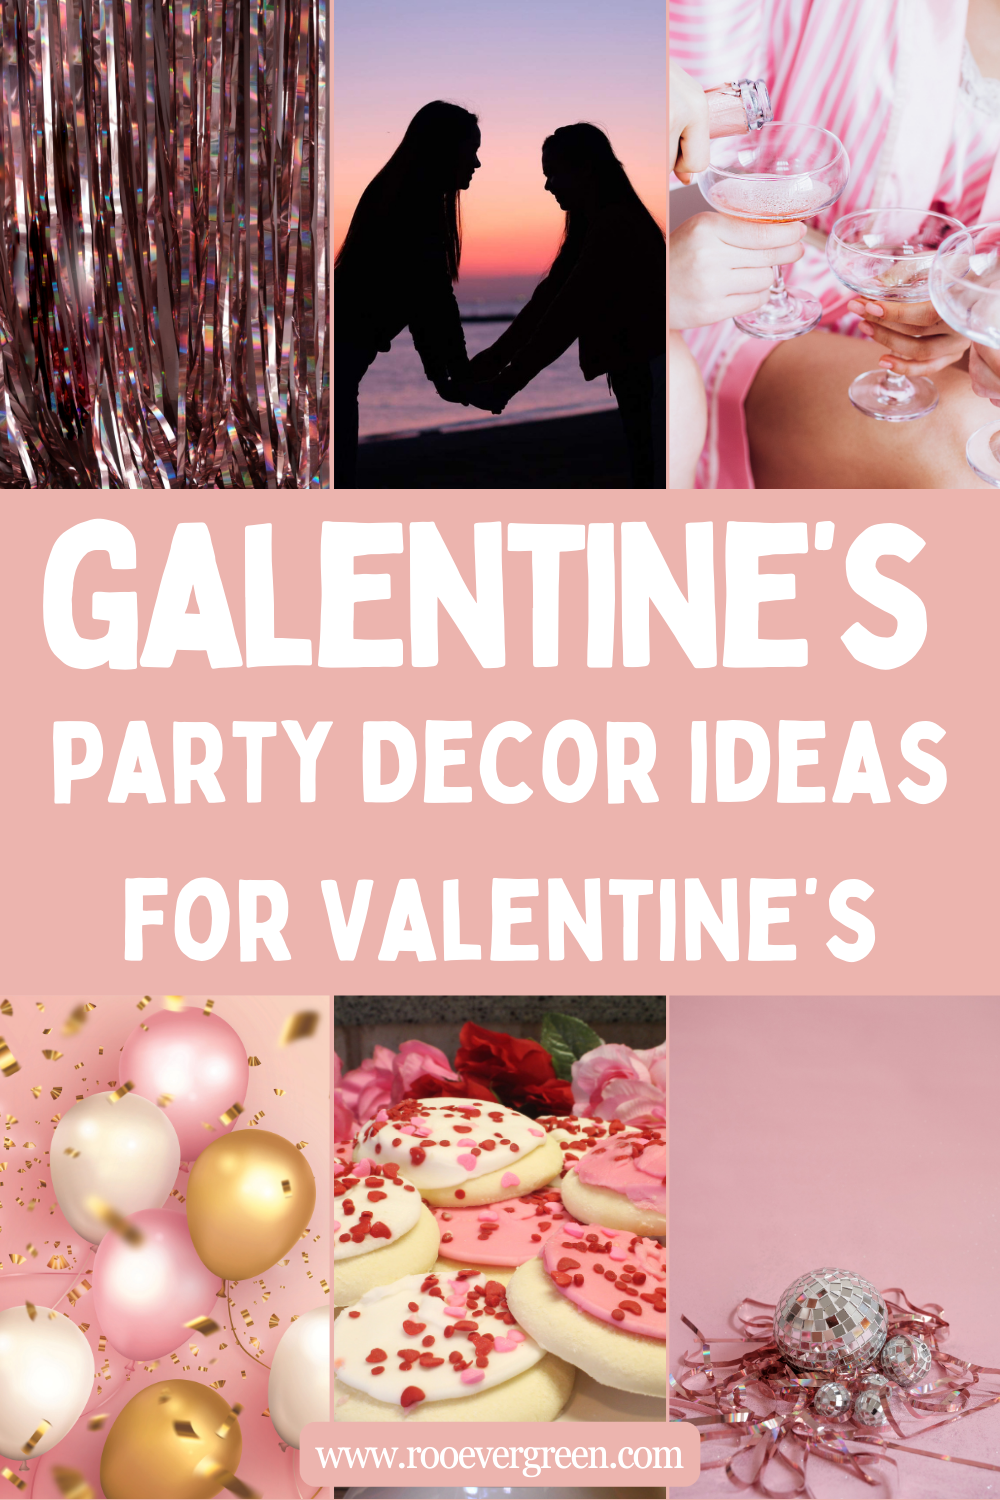 Galentine’s Party & Decor Ideas For Valentine’s